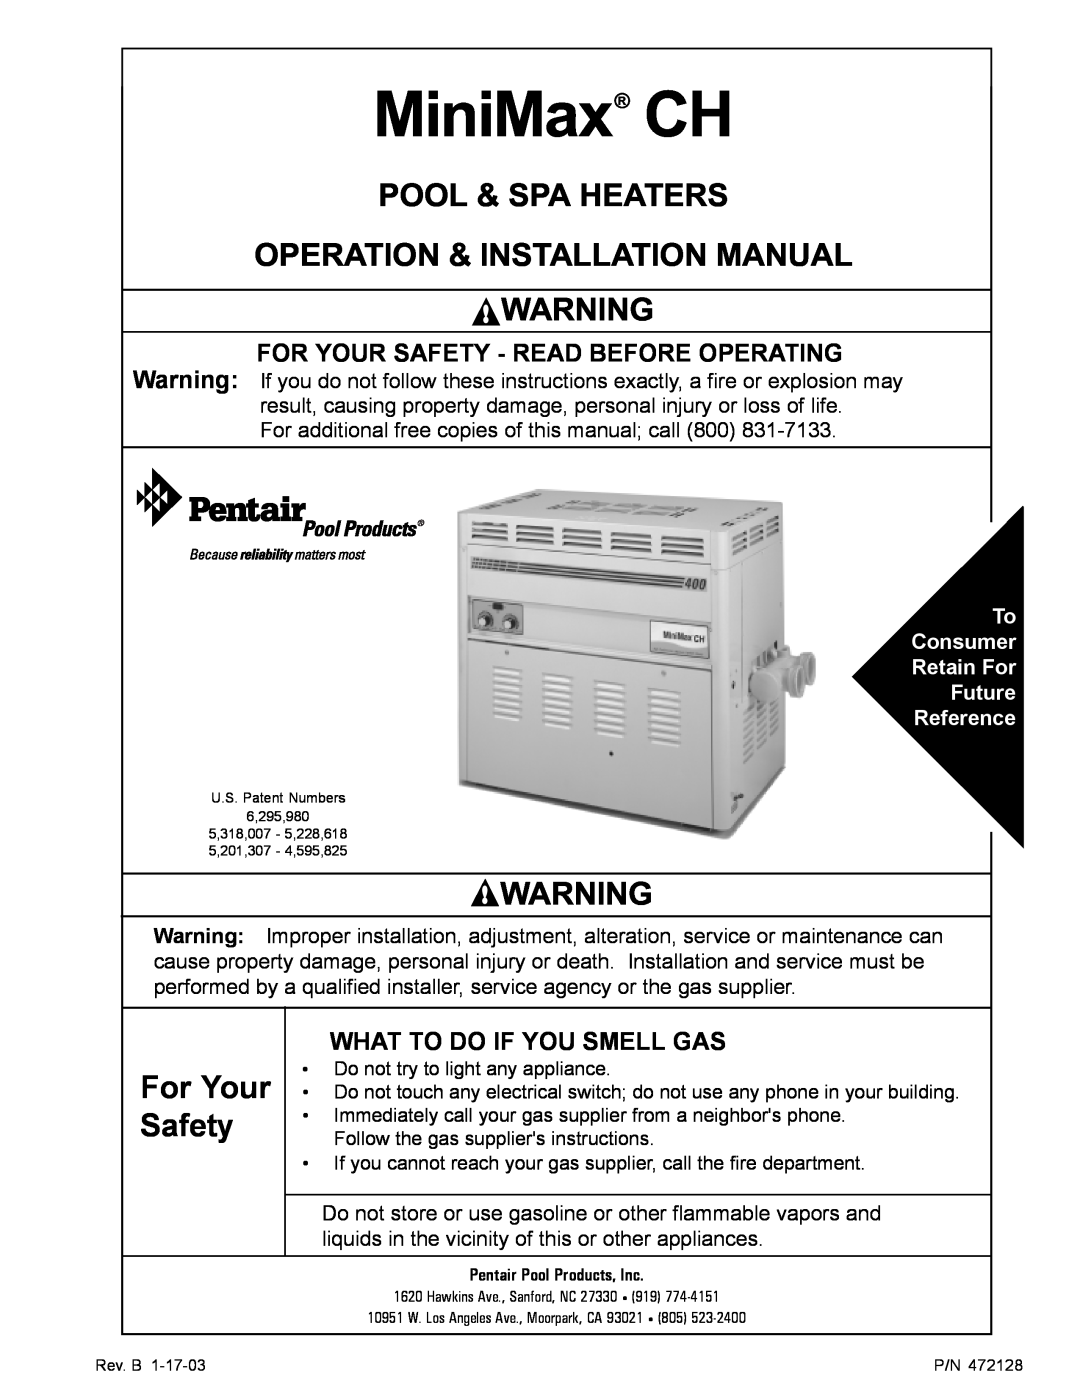 Pentair installation manual MiniMax CH, Pool & Spa Heaters, Operation & Installation Manual, For Your Safety 